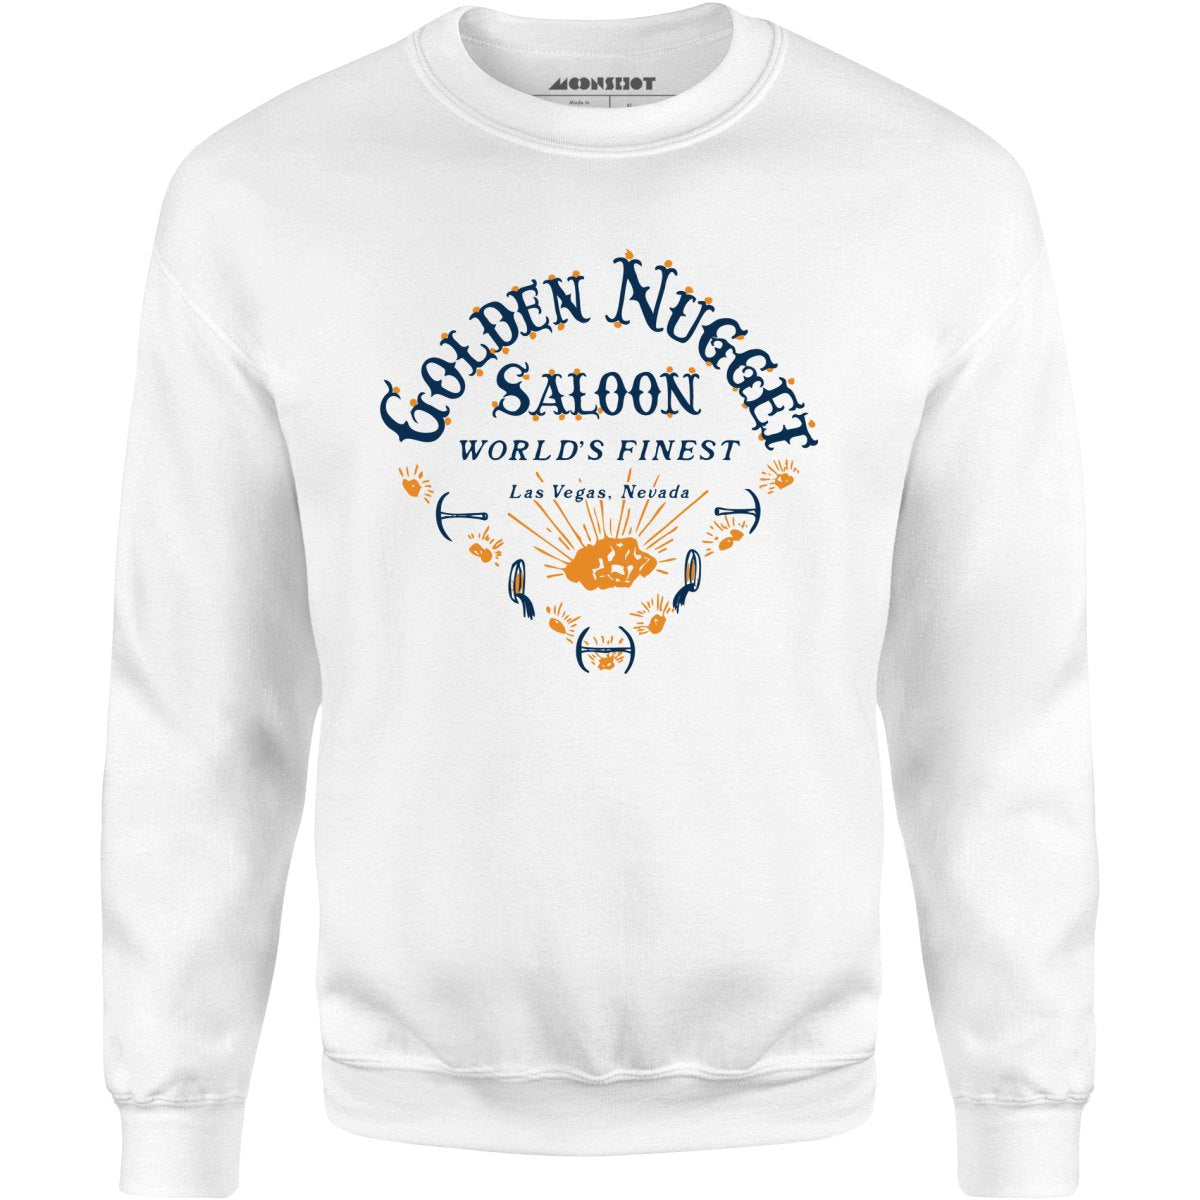 Golden Nugget Saloon - Vintage Las Vegas - Unisex Sweatshirt